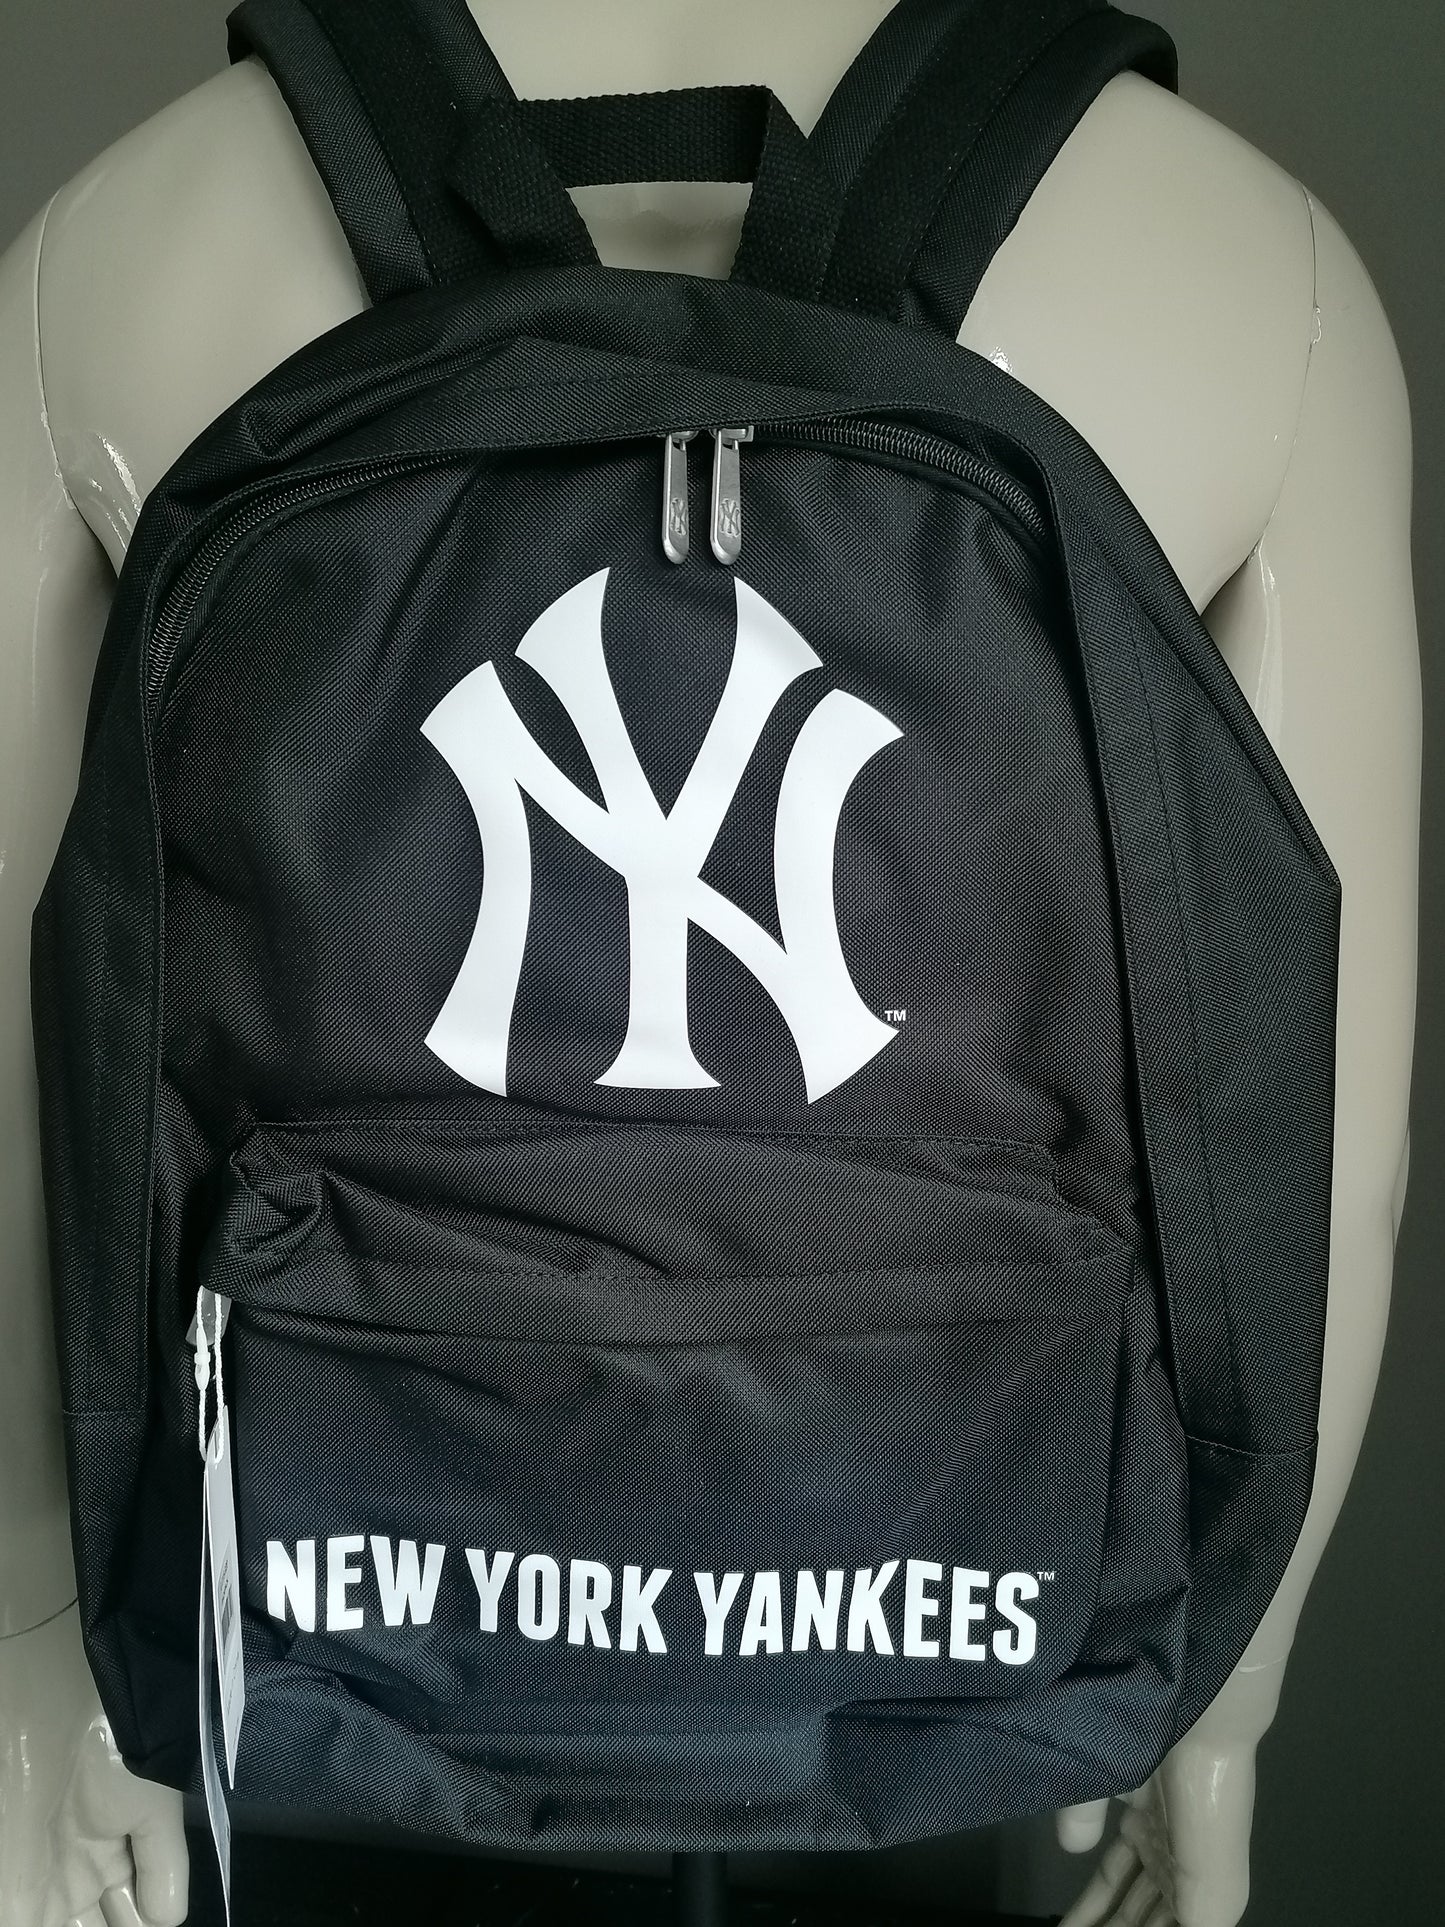 Major League Baseball Original New York Zackpack / Backpack. Bianco e nero. Doppia tasca interna.